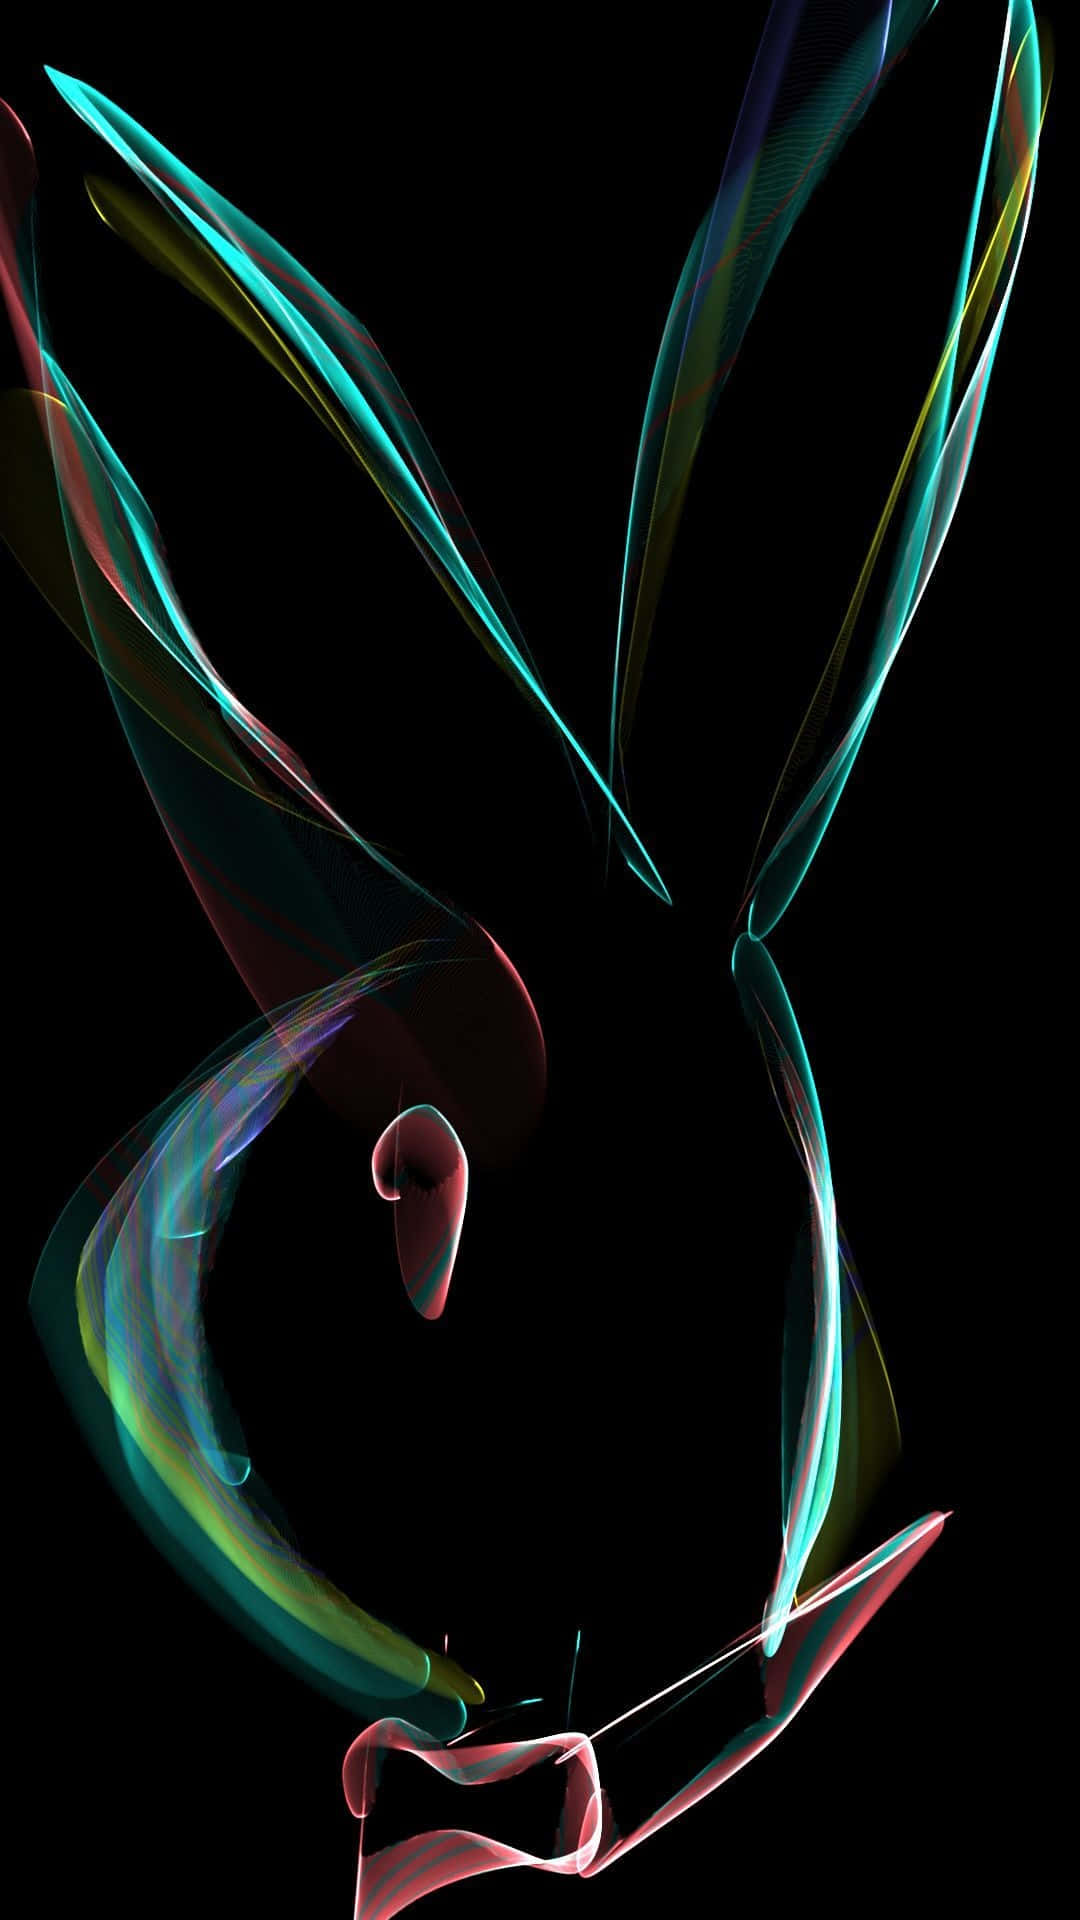 Playboy Bunny in Neon Aesthetics